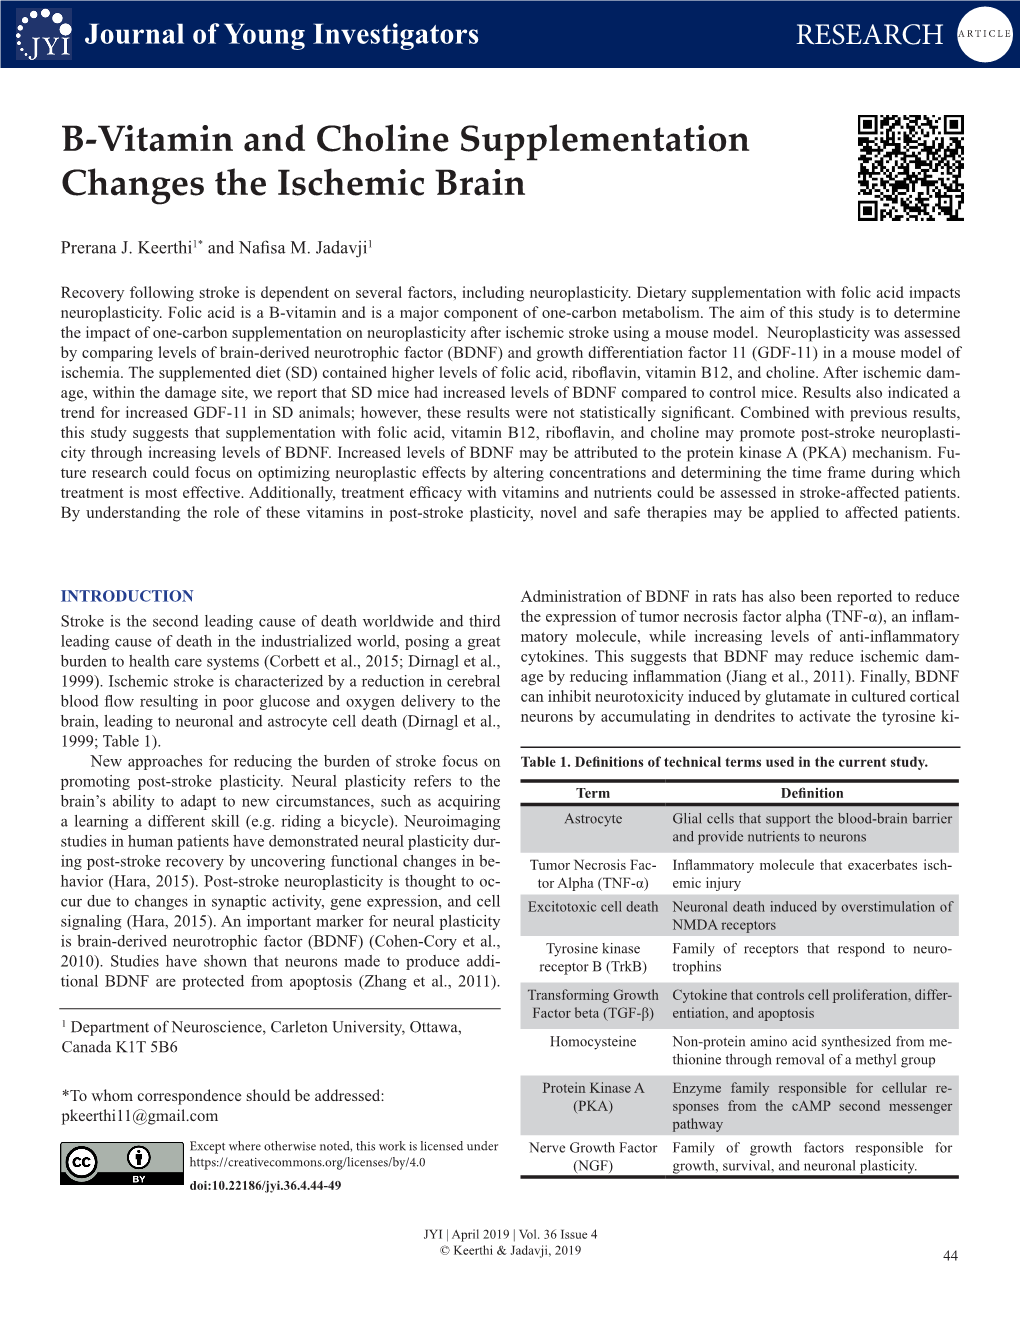 B-Vitamin and Choline Supplementation Changes the Ischemic Brain